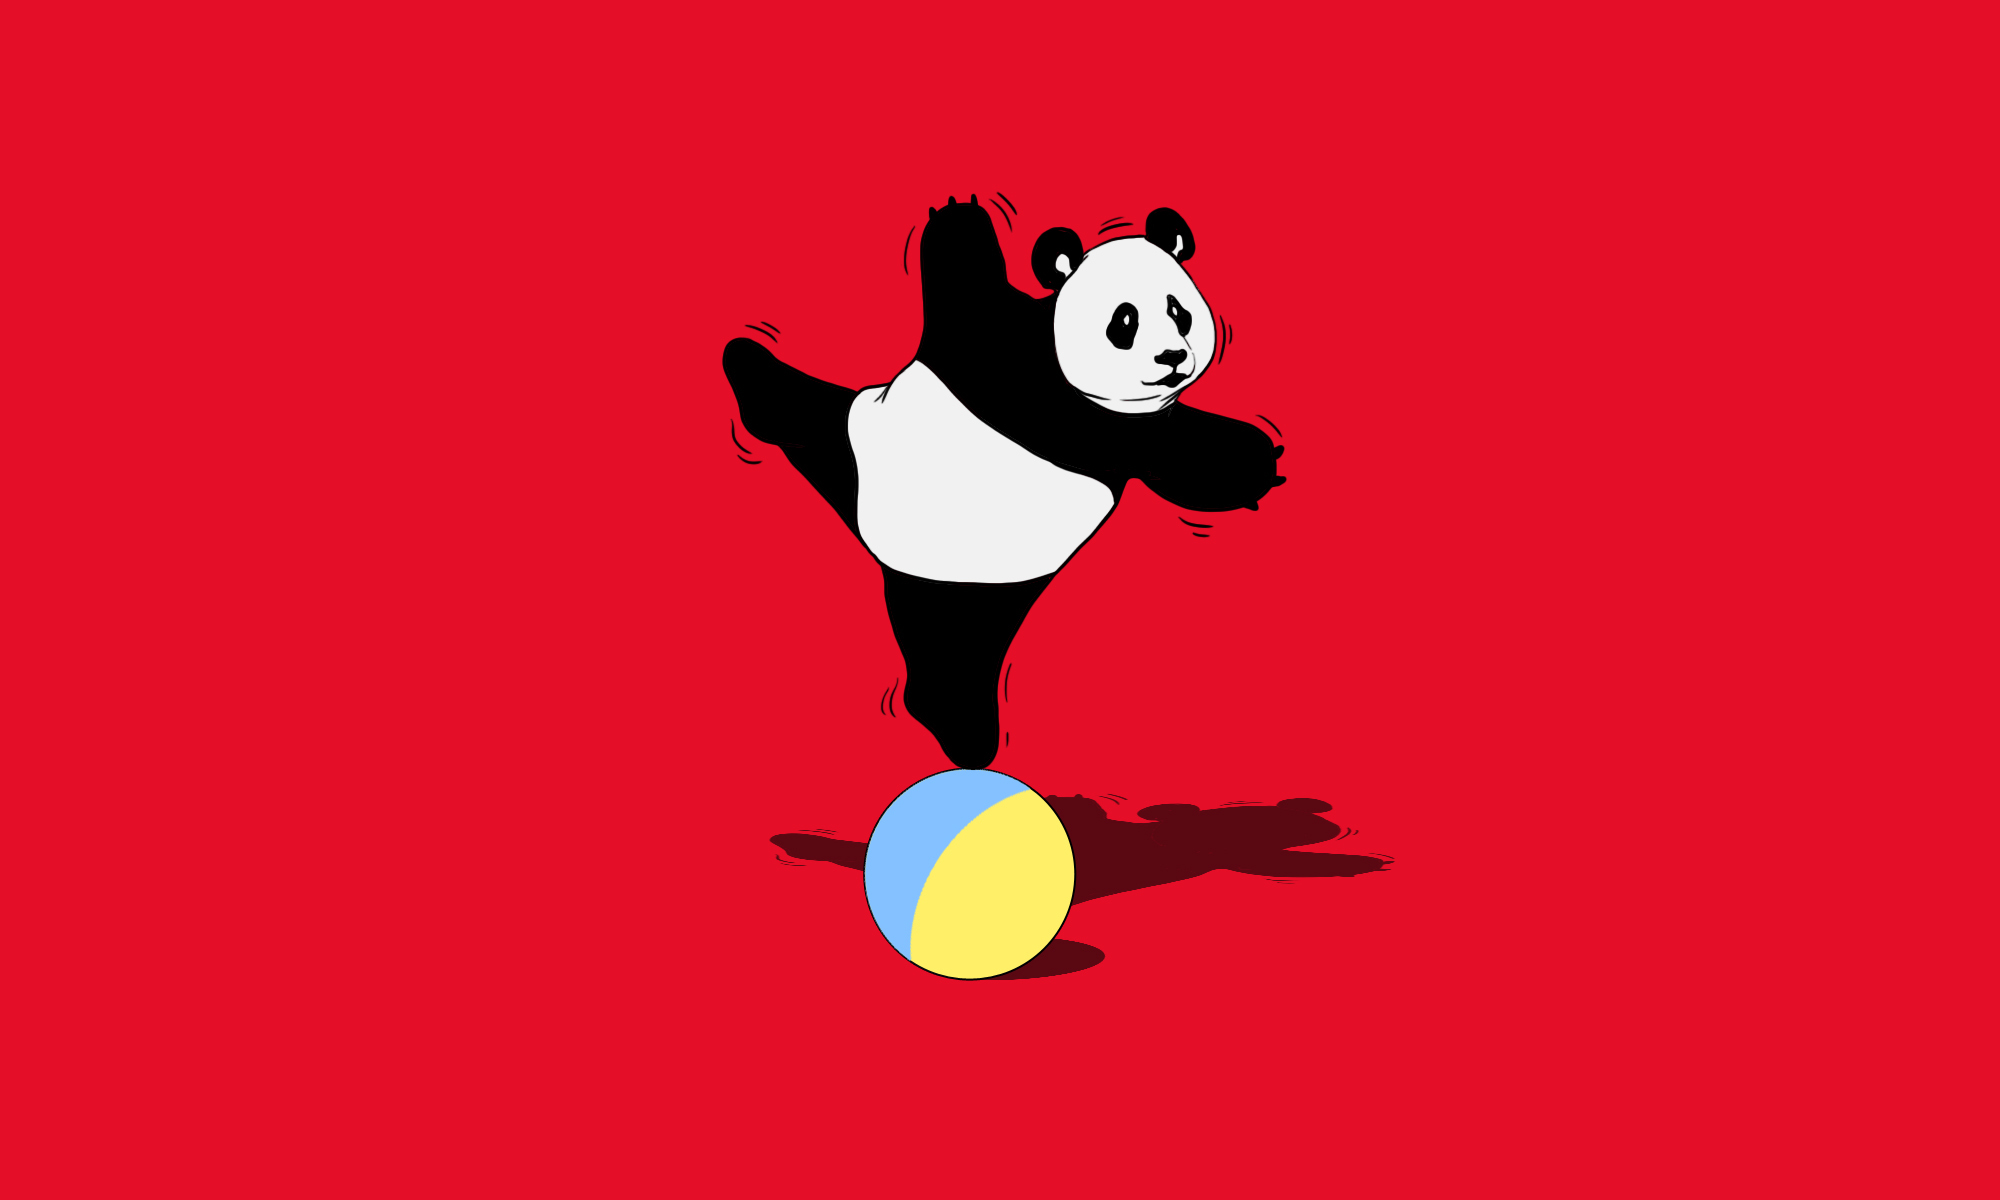 china panda balancing on ukraine colored ball